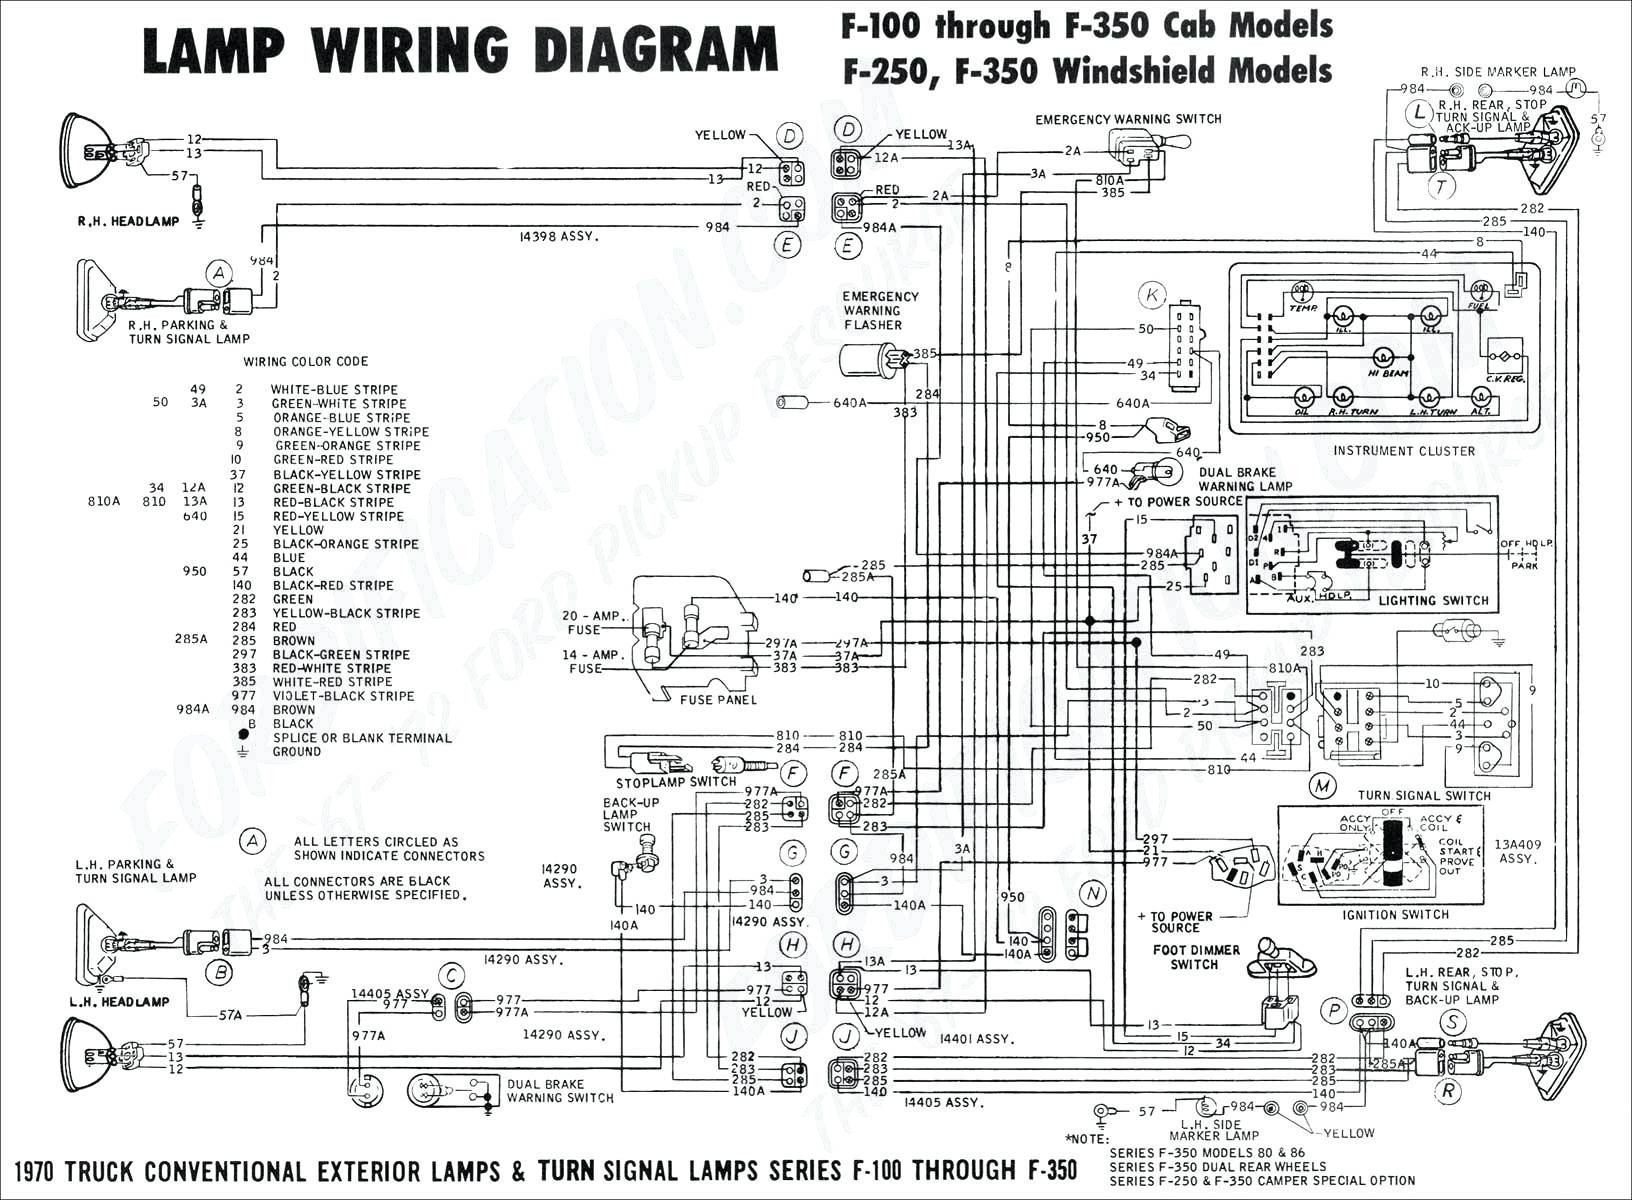 Ops Wiring Diagrams Wiring Diagrams Bib Mafs Wiring Diagram 2004 Hyundai Santa Fe